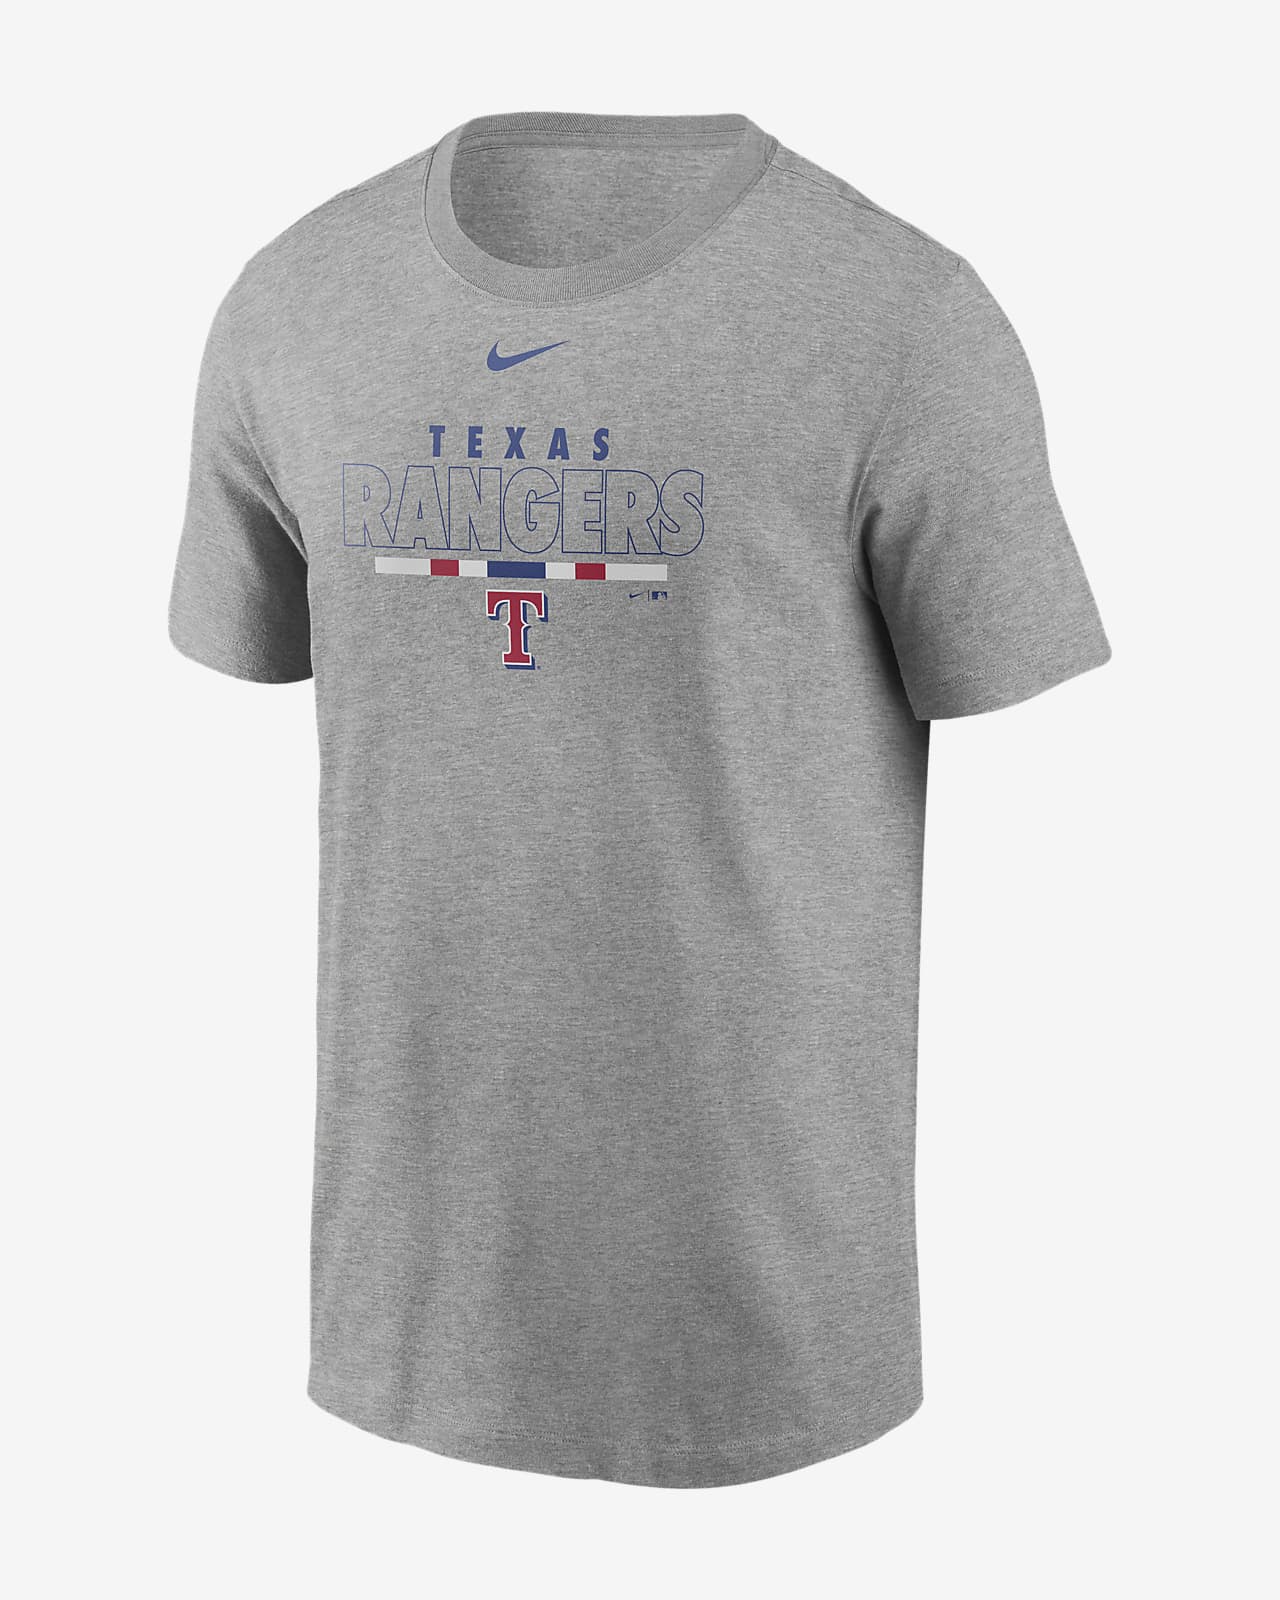 3x texas rangers shirts